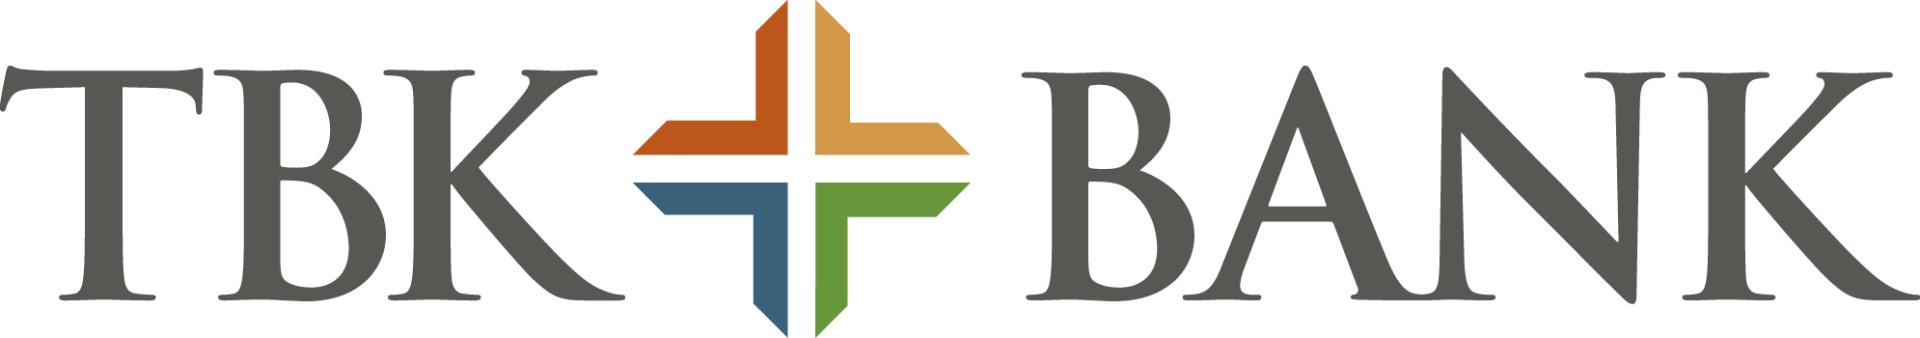 TBK bank logo.jpg